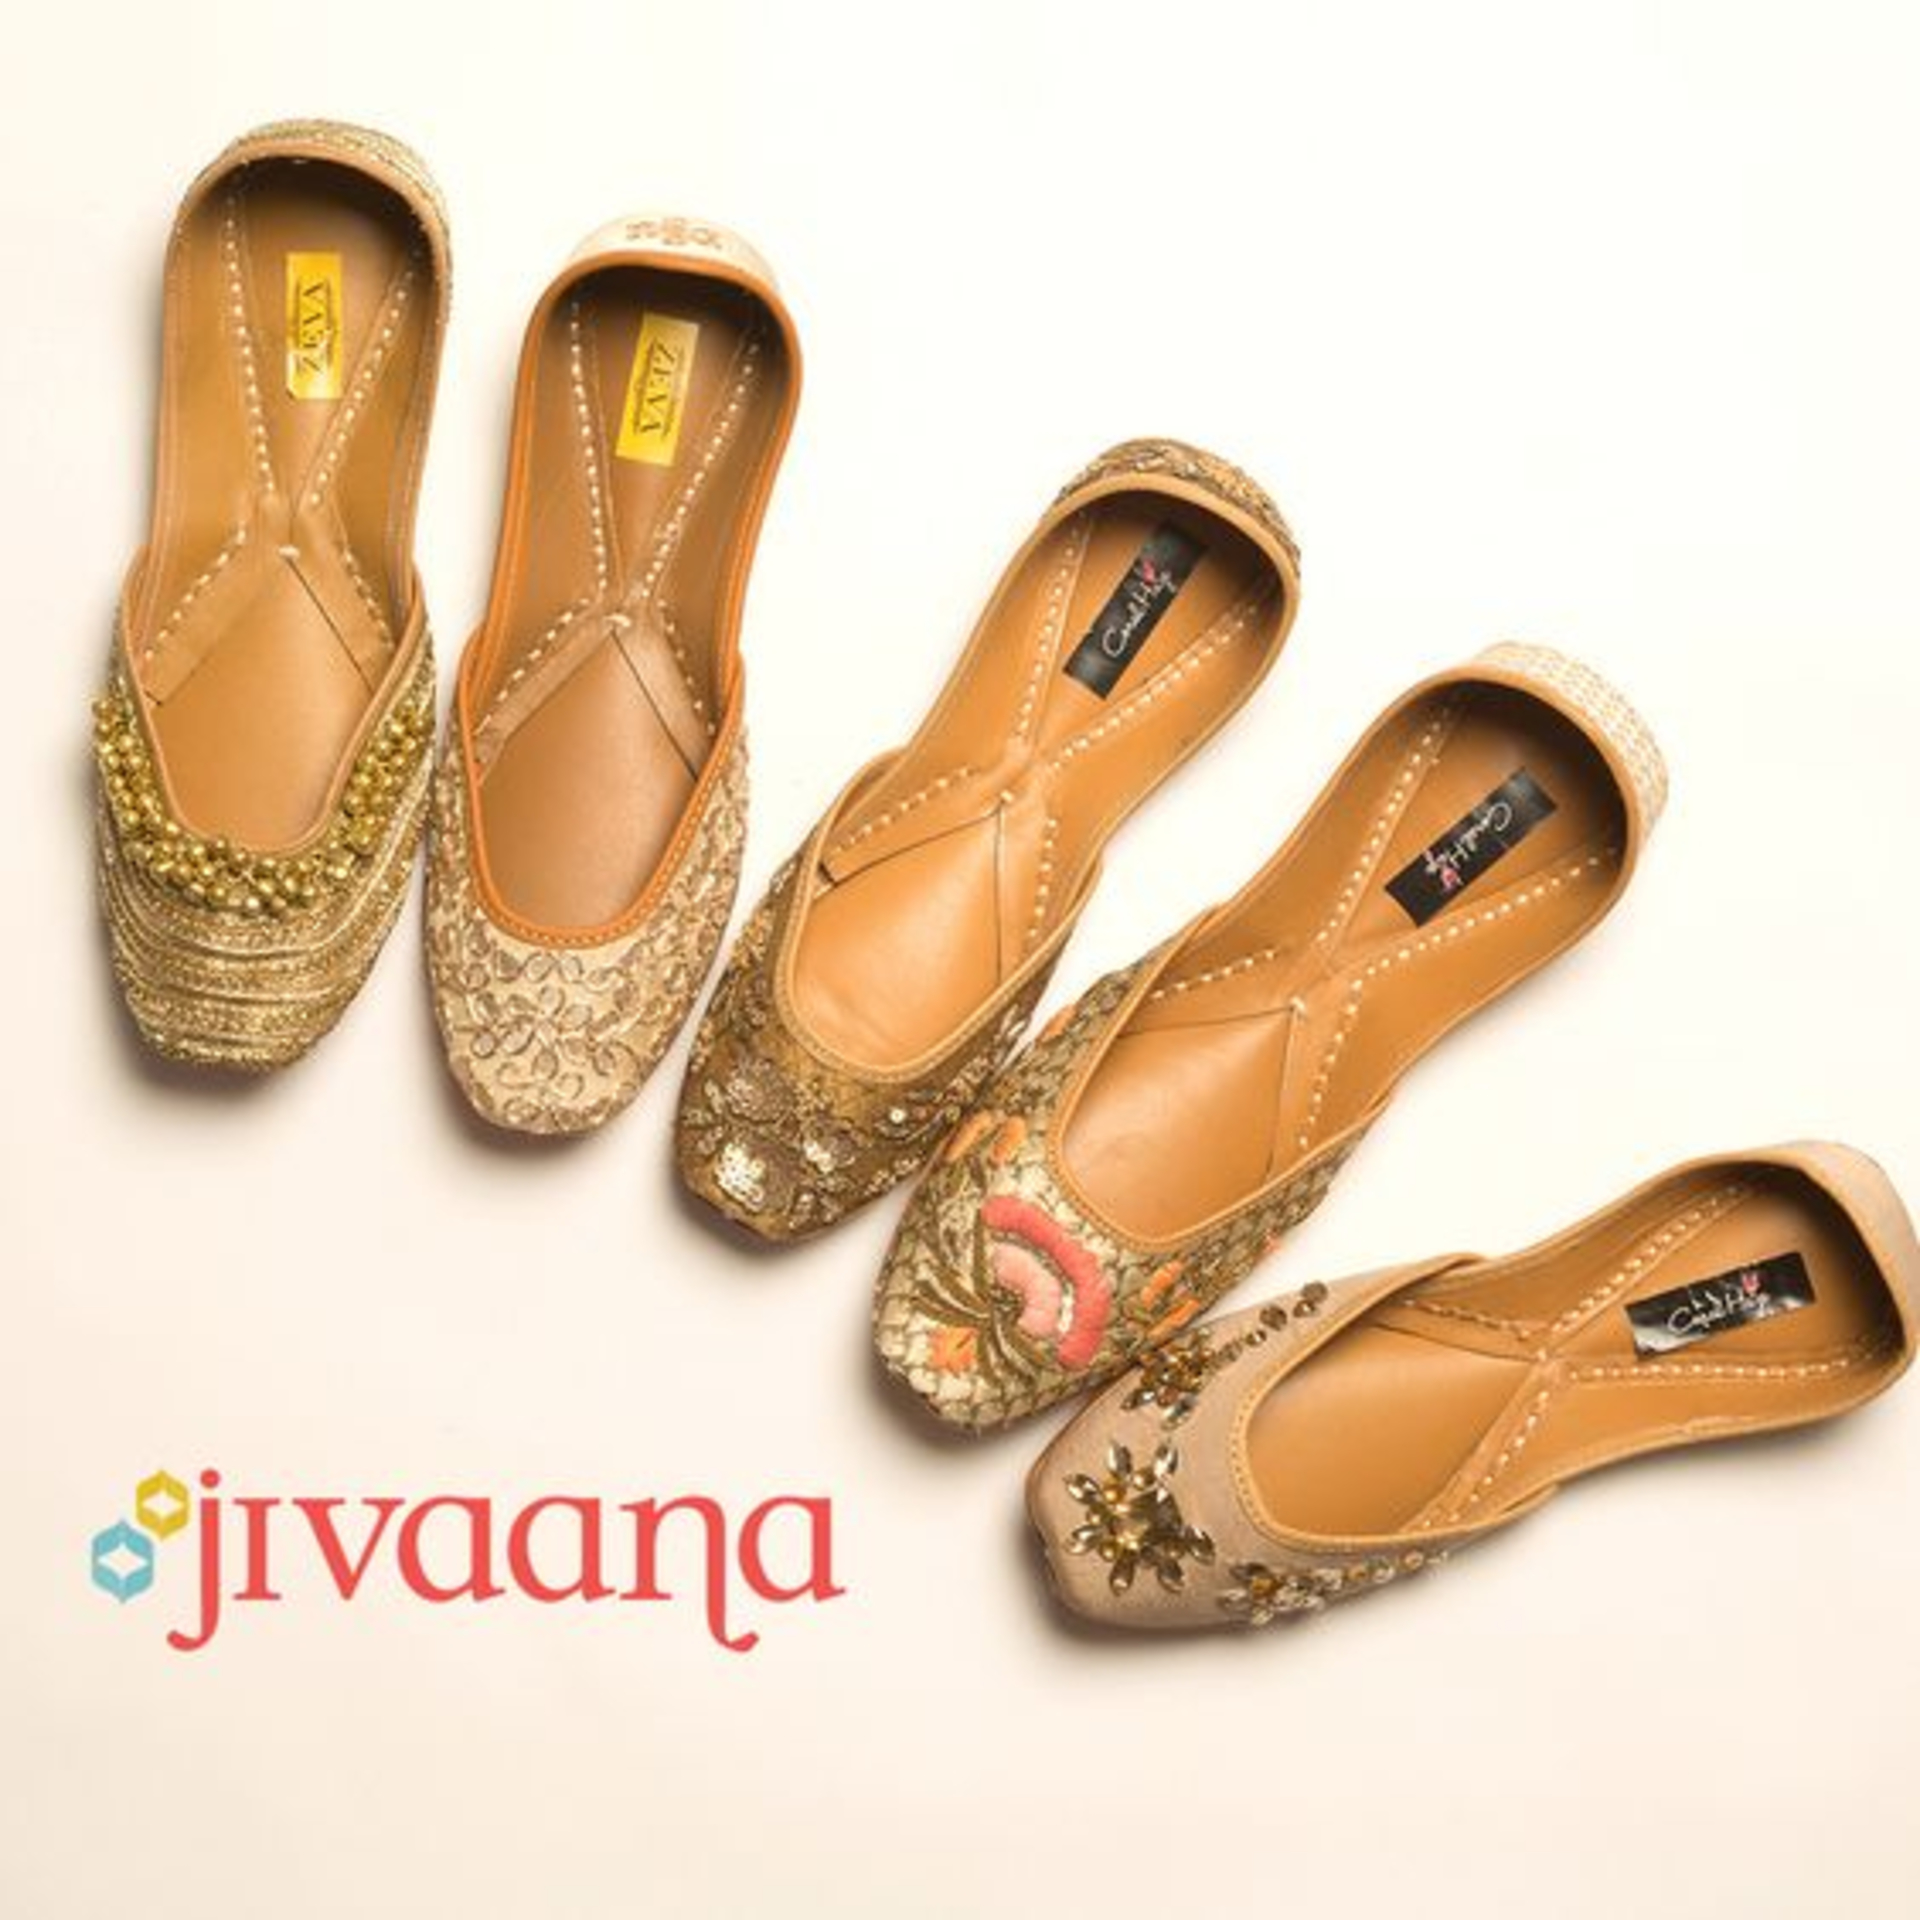 WOMEN FOOTWEAR FOR AN INDIAN WEDDING - FT. JIVAANA.COM image